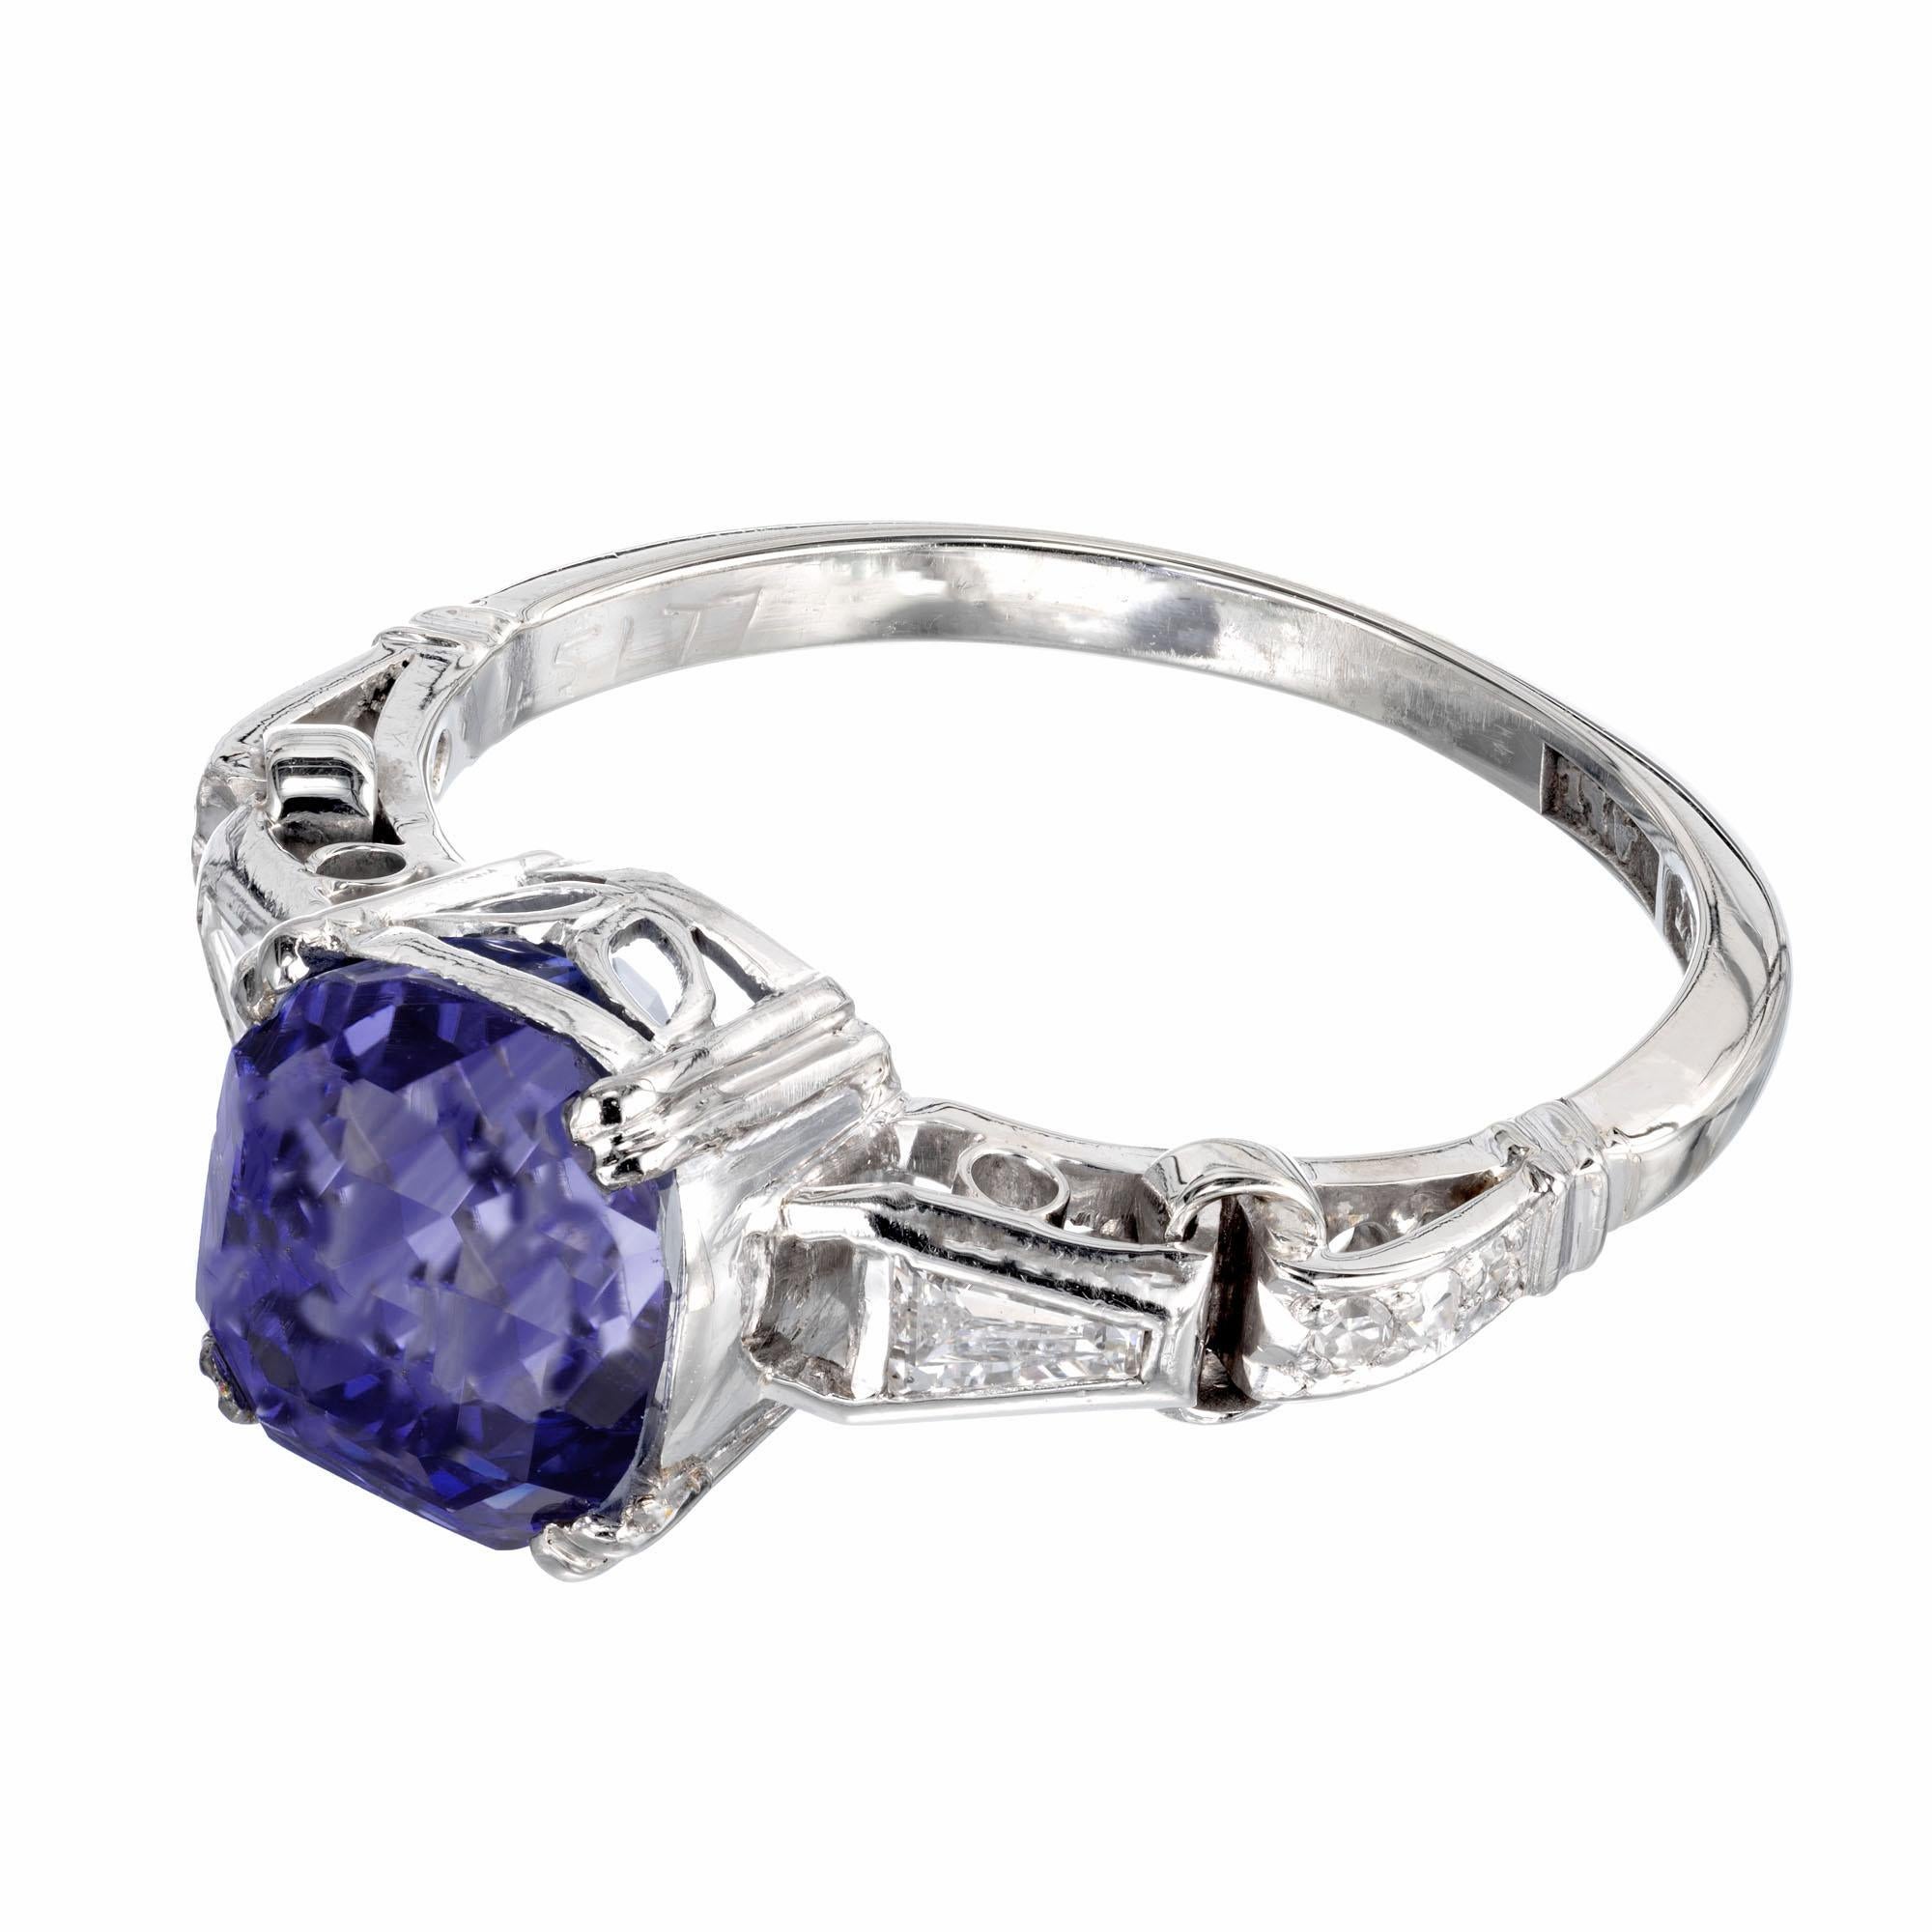 Cushion Cut GIA Certified 3.41 Carat Sapphire Diamond White Gold Engagement Ring